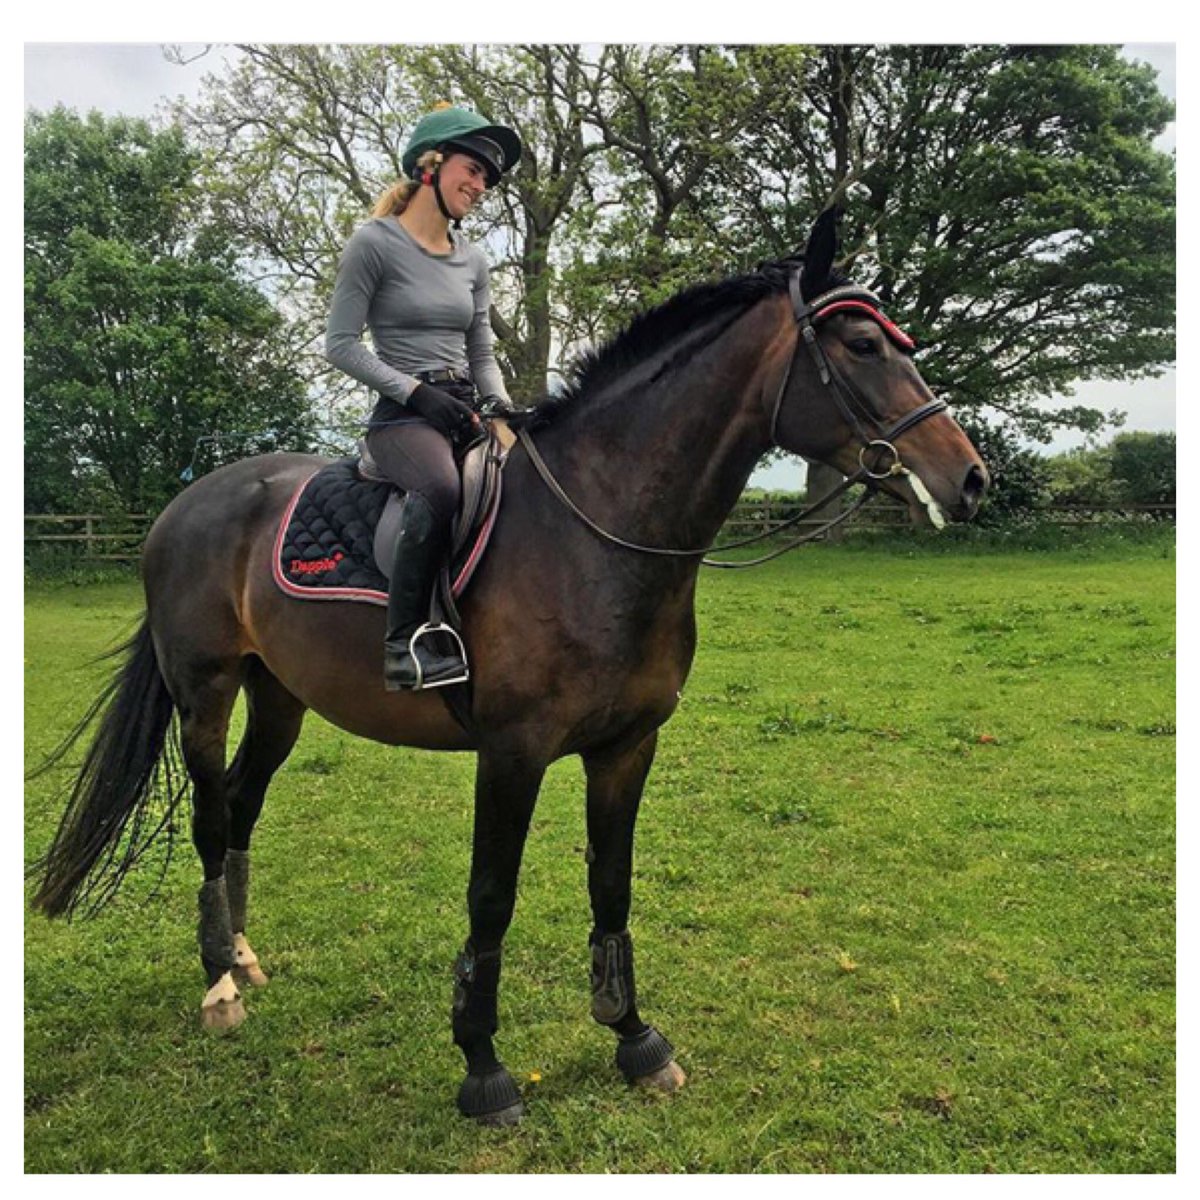 Equestrian style. Shop Harriet's look online sentwistle.co.uk

#equestrian #equestrianbrand #fashion #fashionbrand #londonfashion